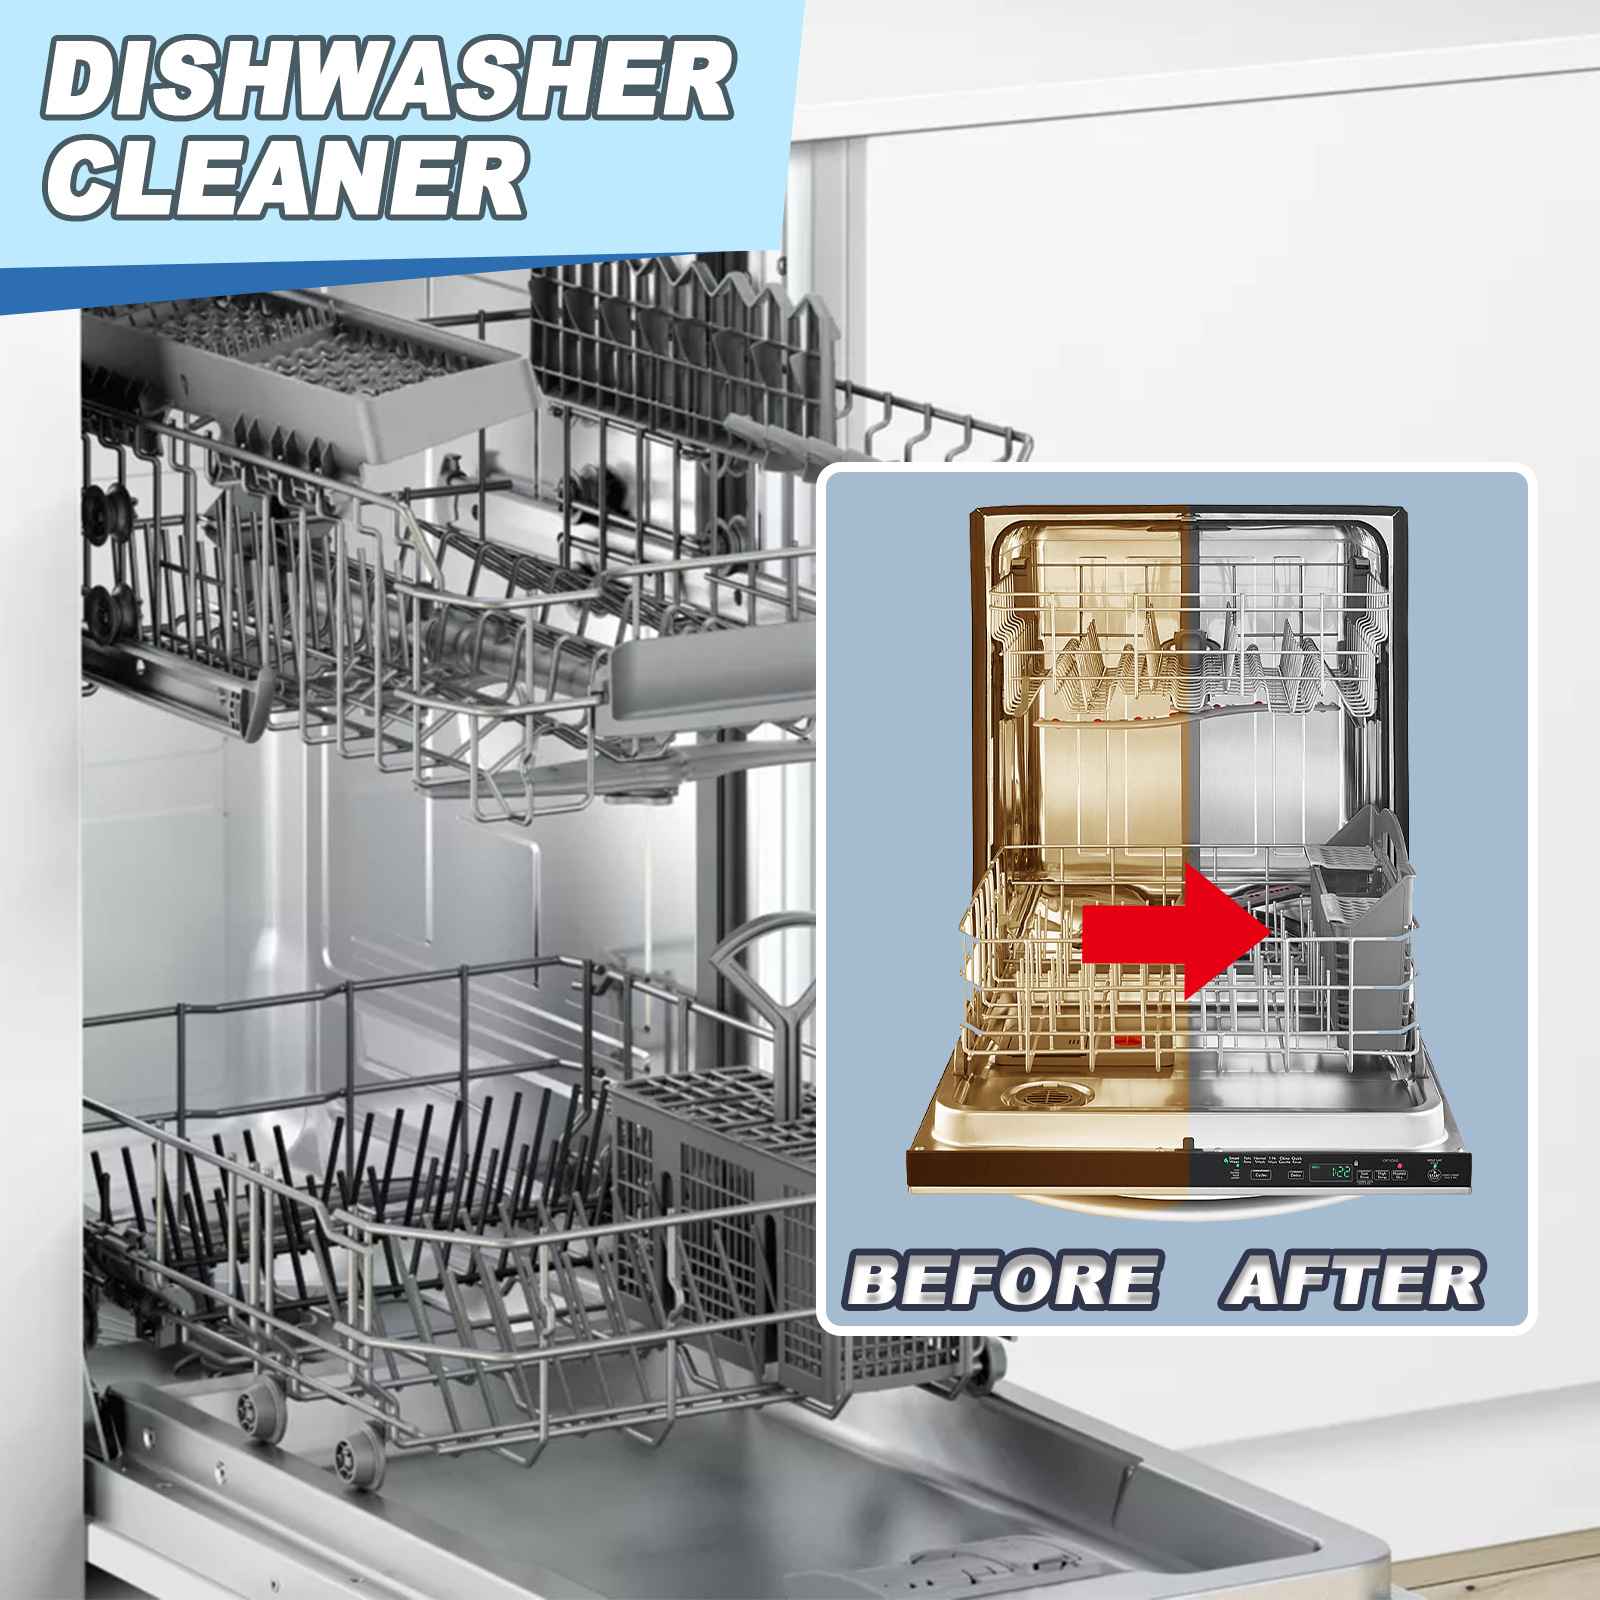 Rustic Round Dishwasher Pod Holder Dishwasher Tablet - Temu